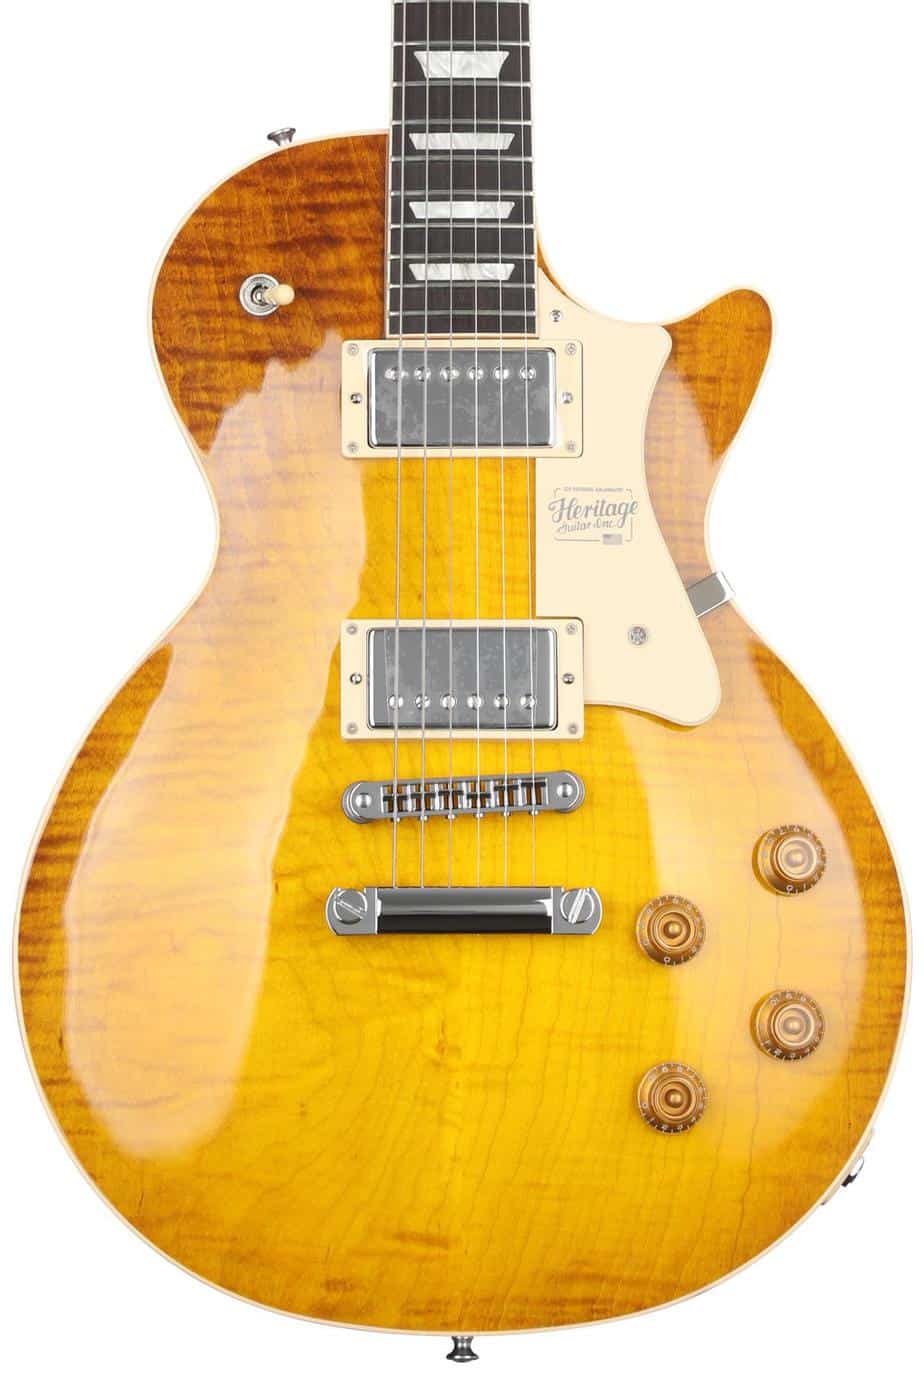 Heritage Standard H-150 electric guitar - Dirty Lemon Burst
